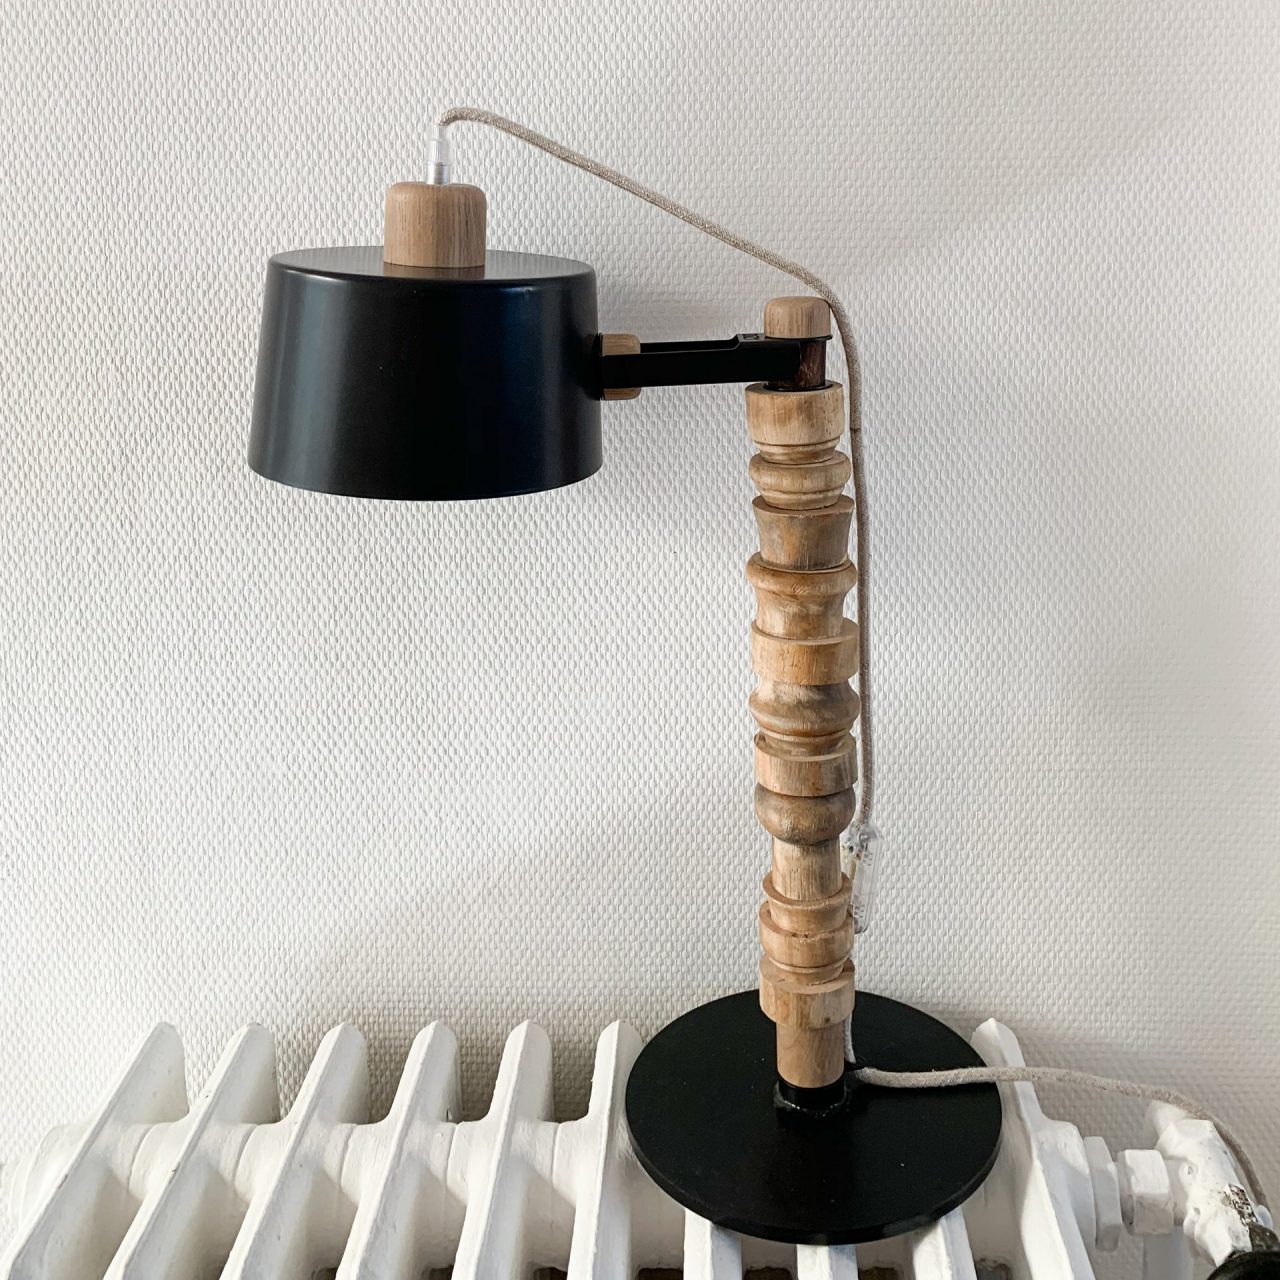 Lampe - lampe de bureau - lampe de chevet. Fabrication française.